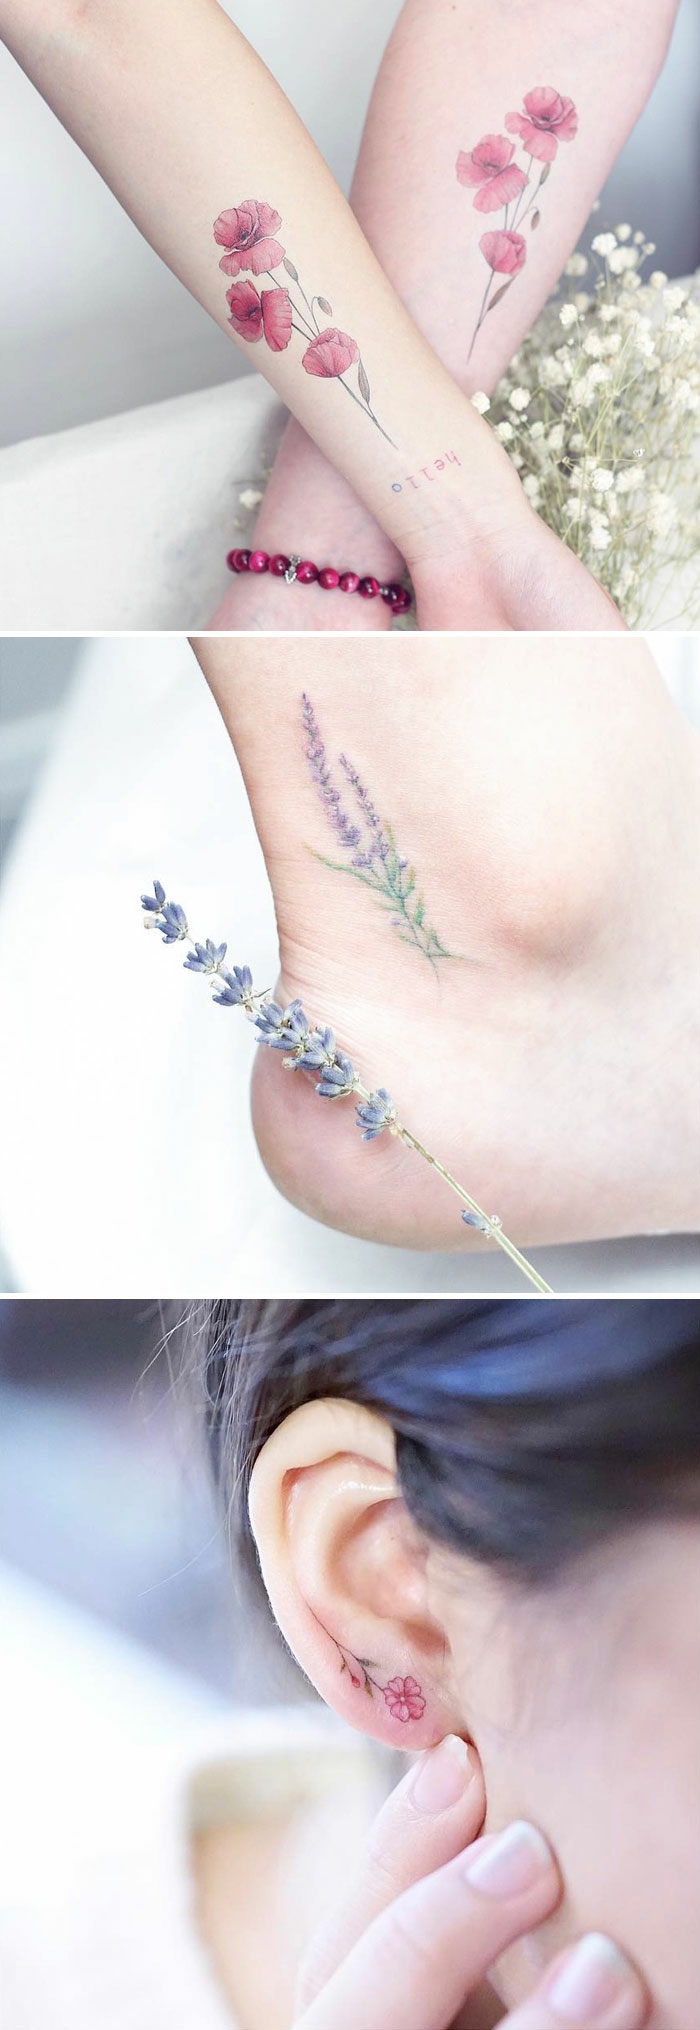 Joli tatouage fleur d hibiscus ou pivoine tatouage magnifique